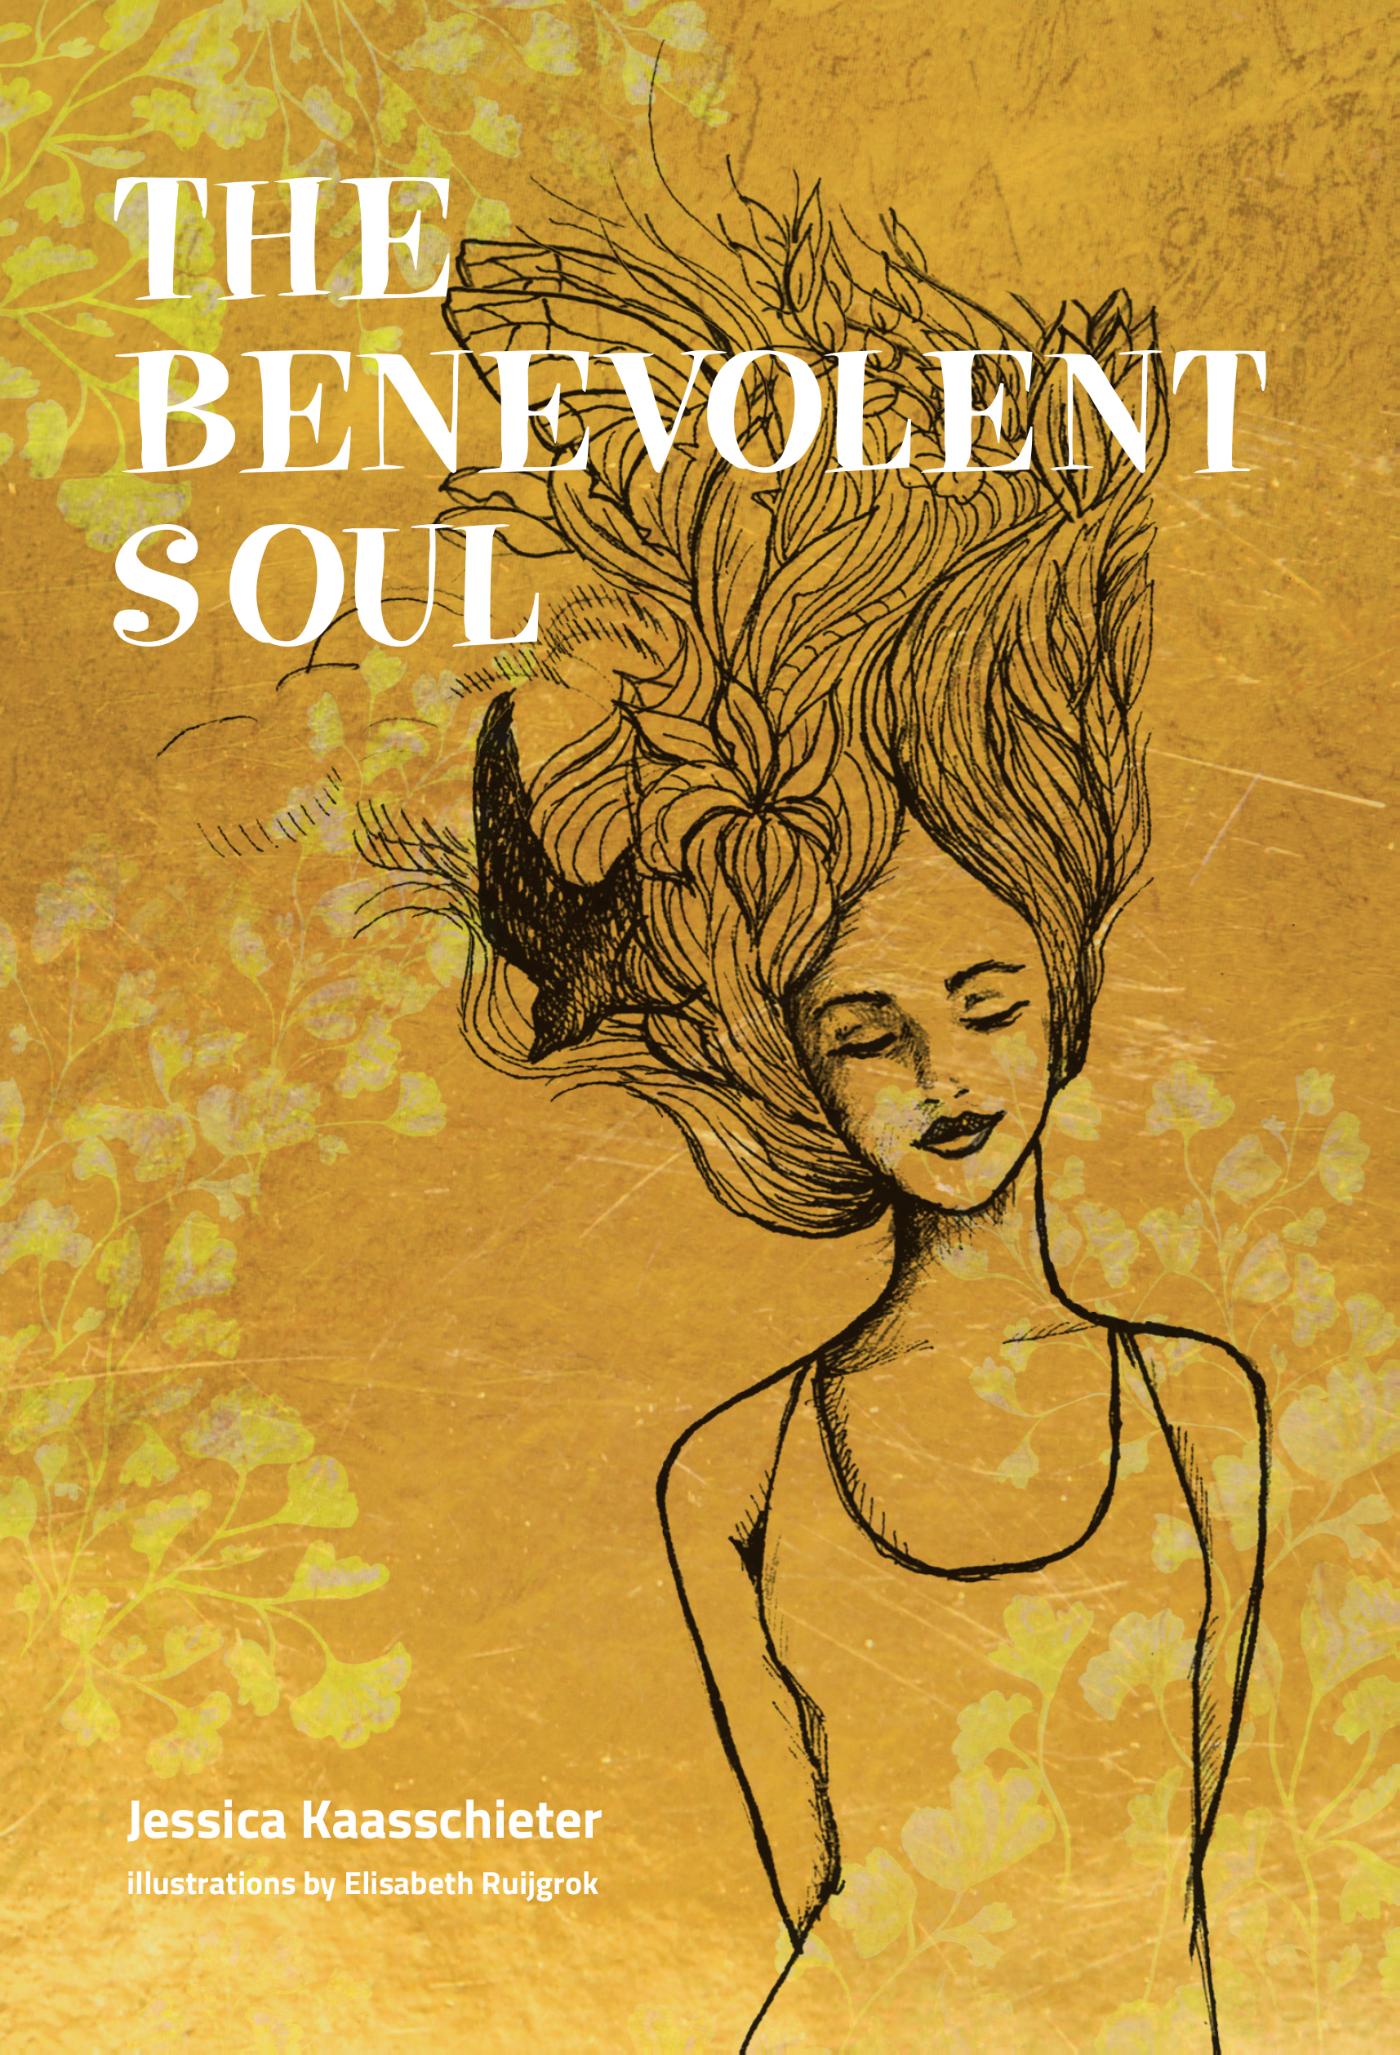 The benevolent soul (Ebook)